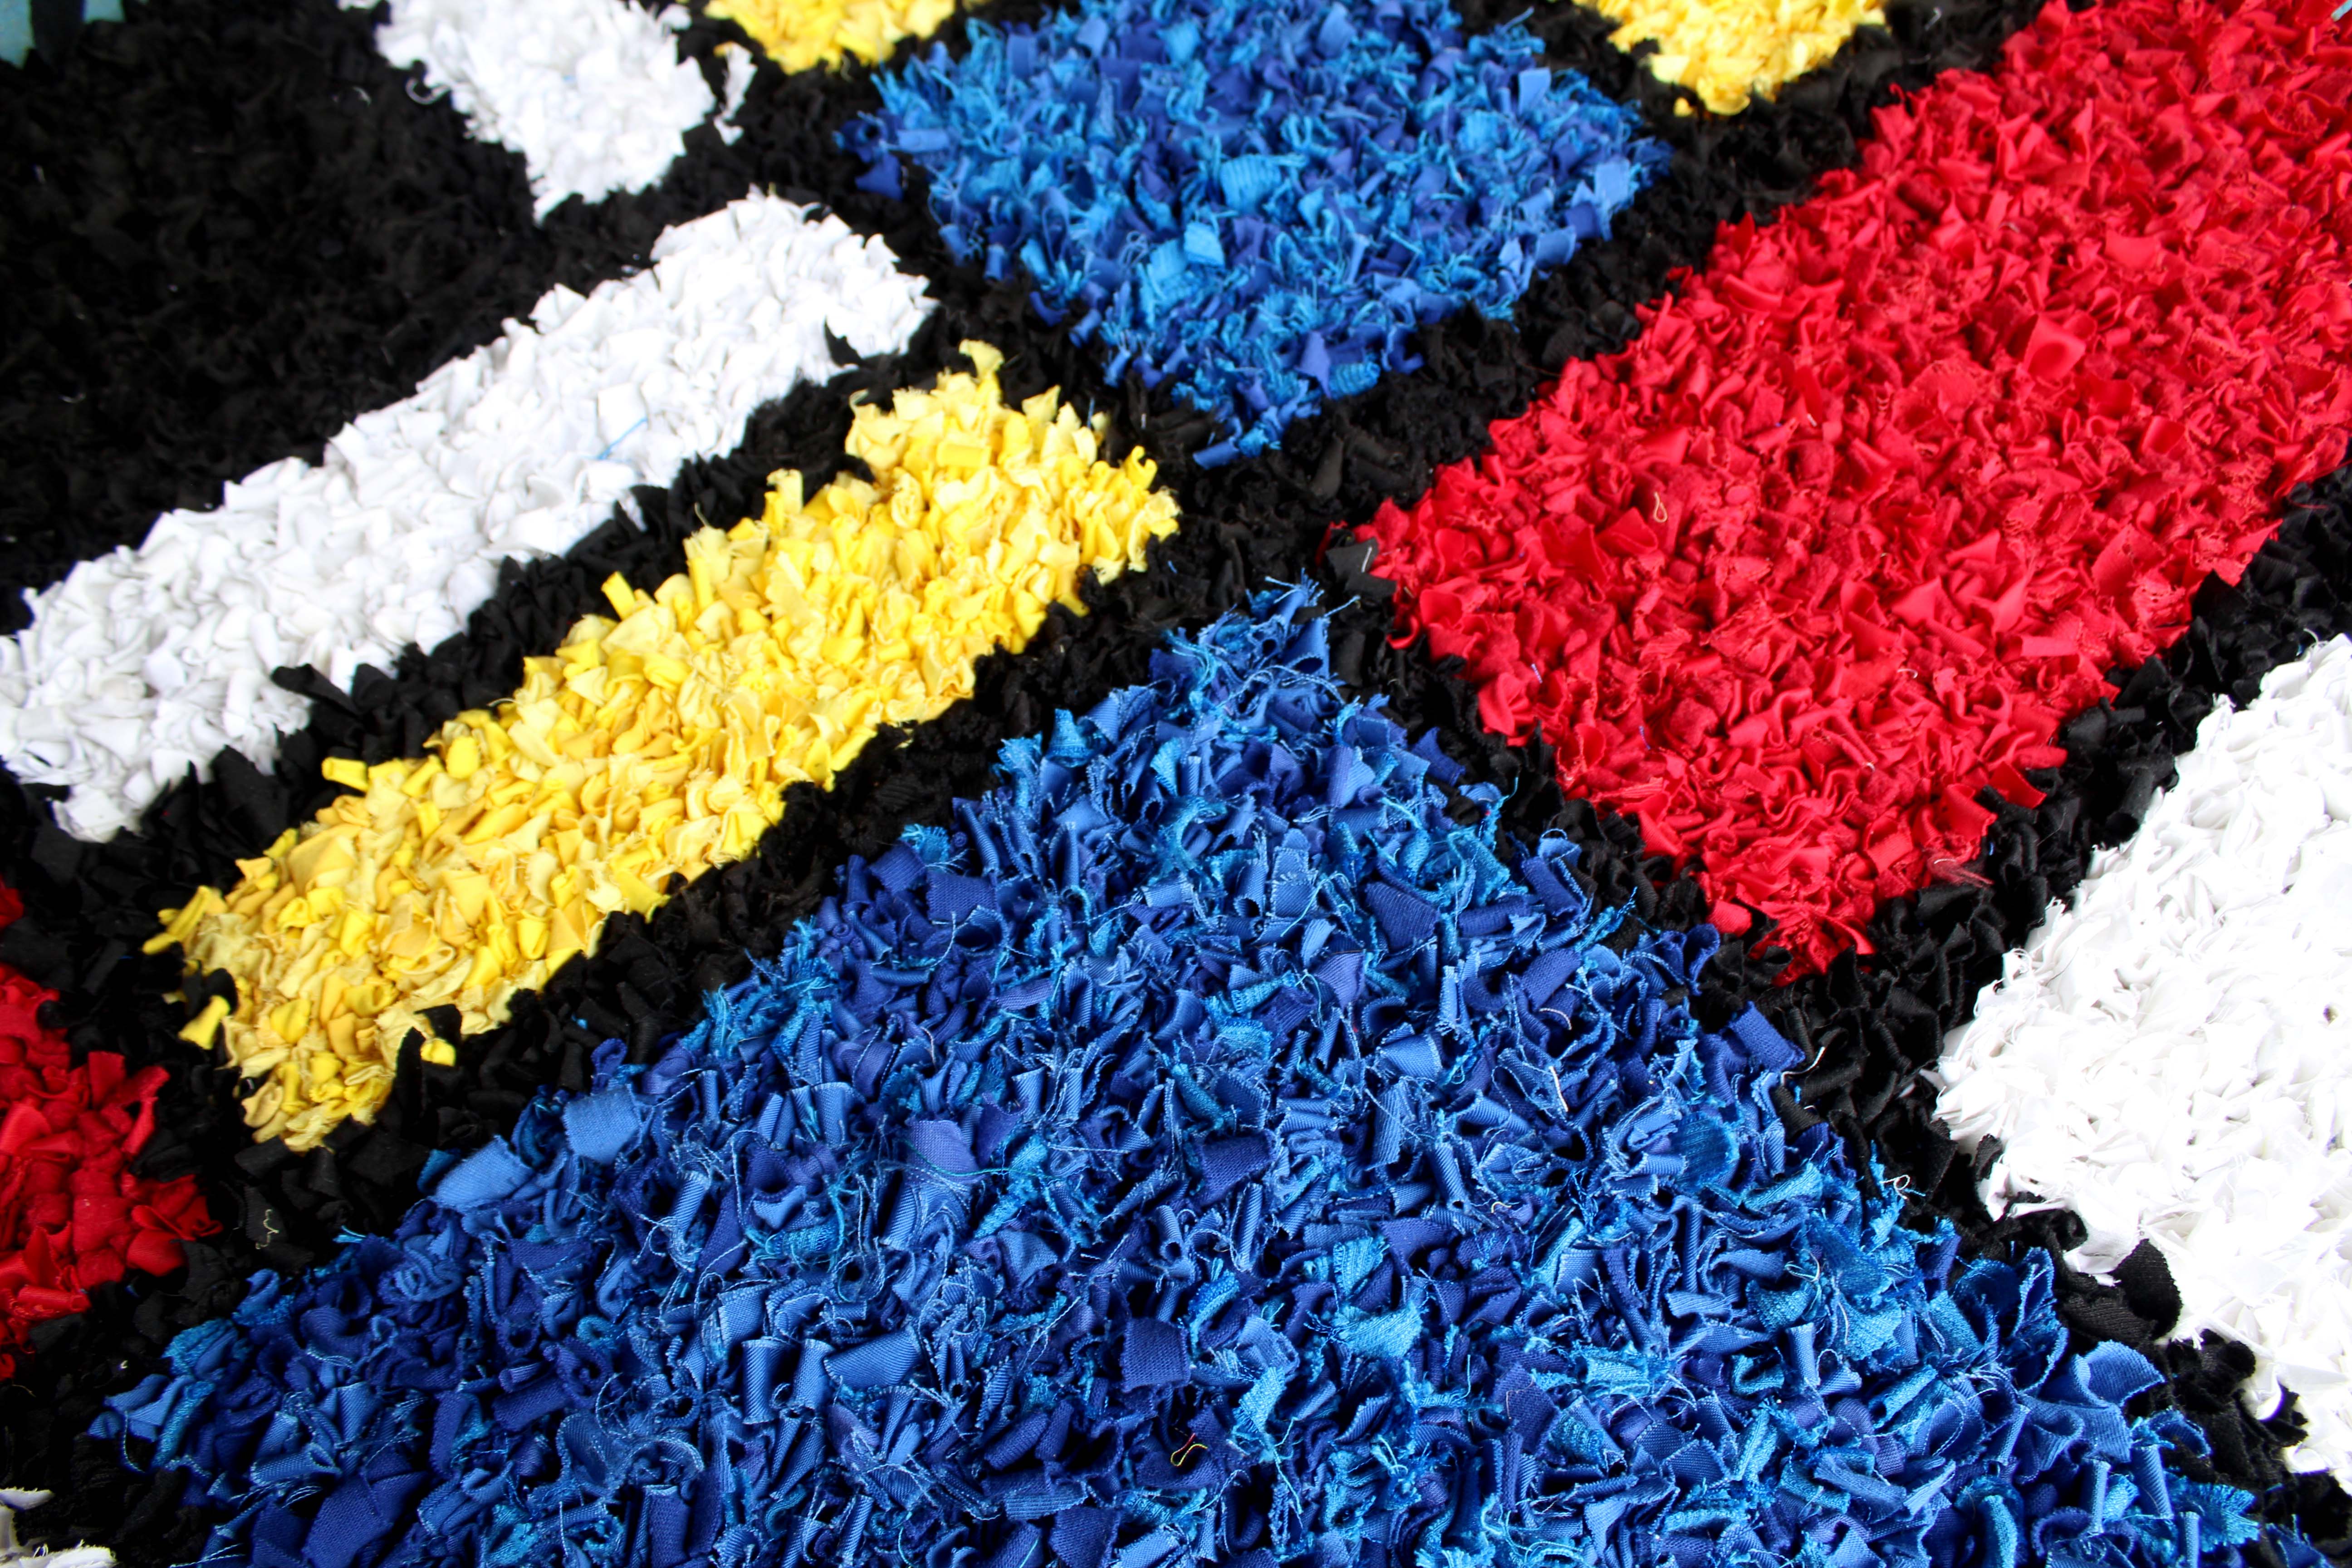 Mondrian inspired rag rug up close details of the blue fabrics